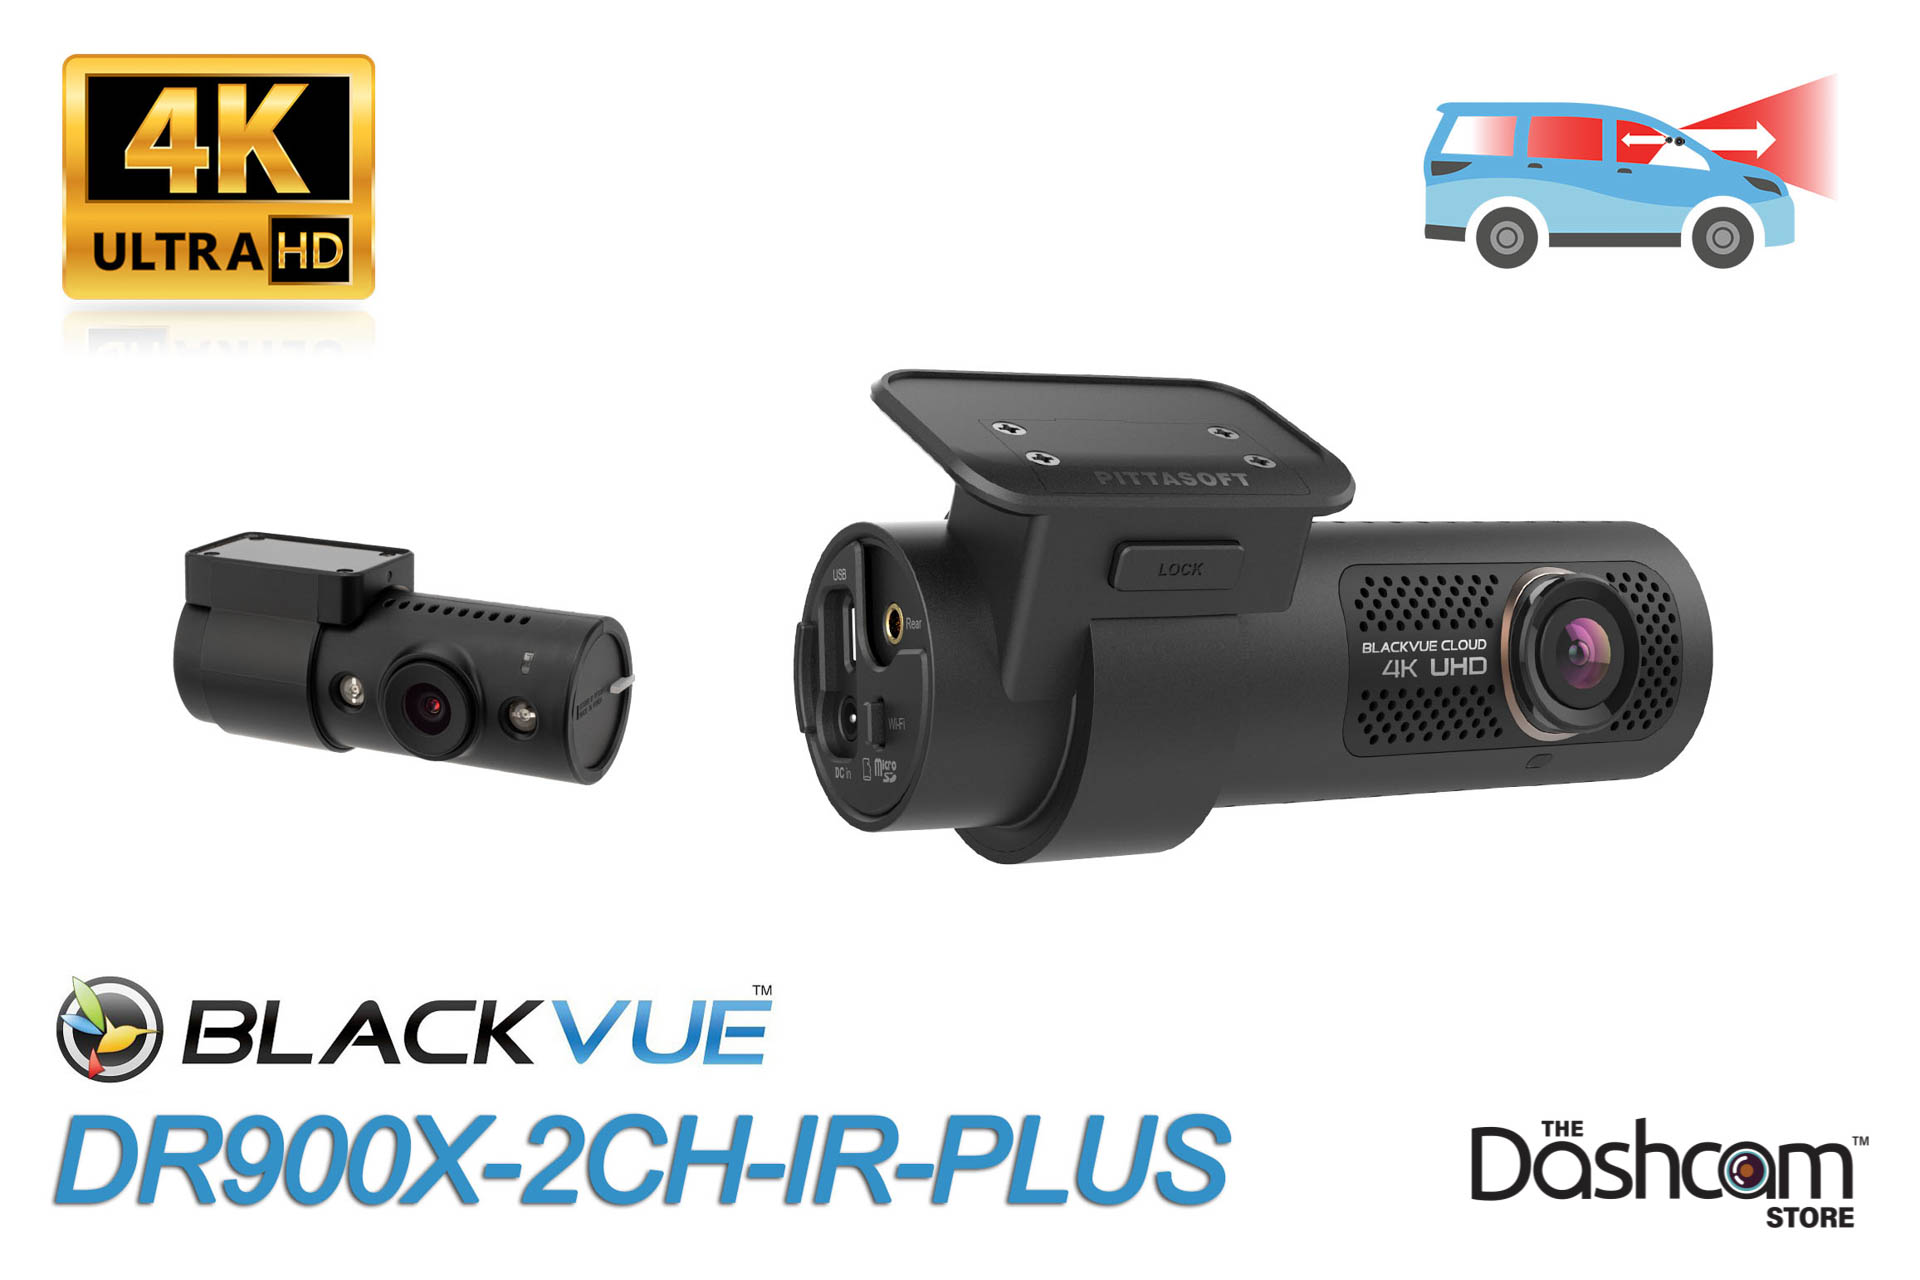 Shop DR900X-2CH-IR-PLUS Dual Lens 4K GPS WiFi Dash Cam